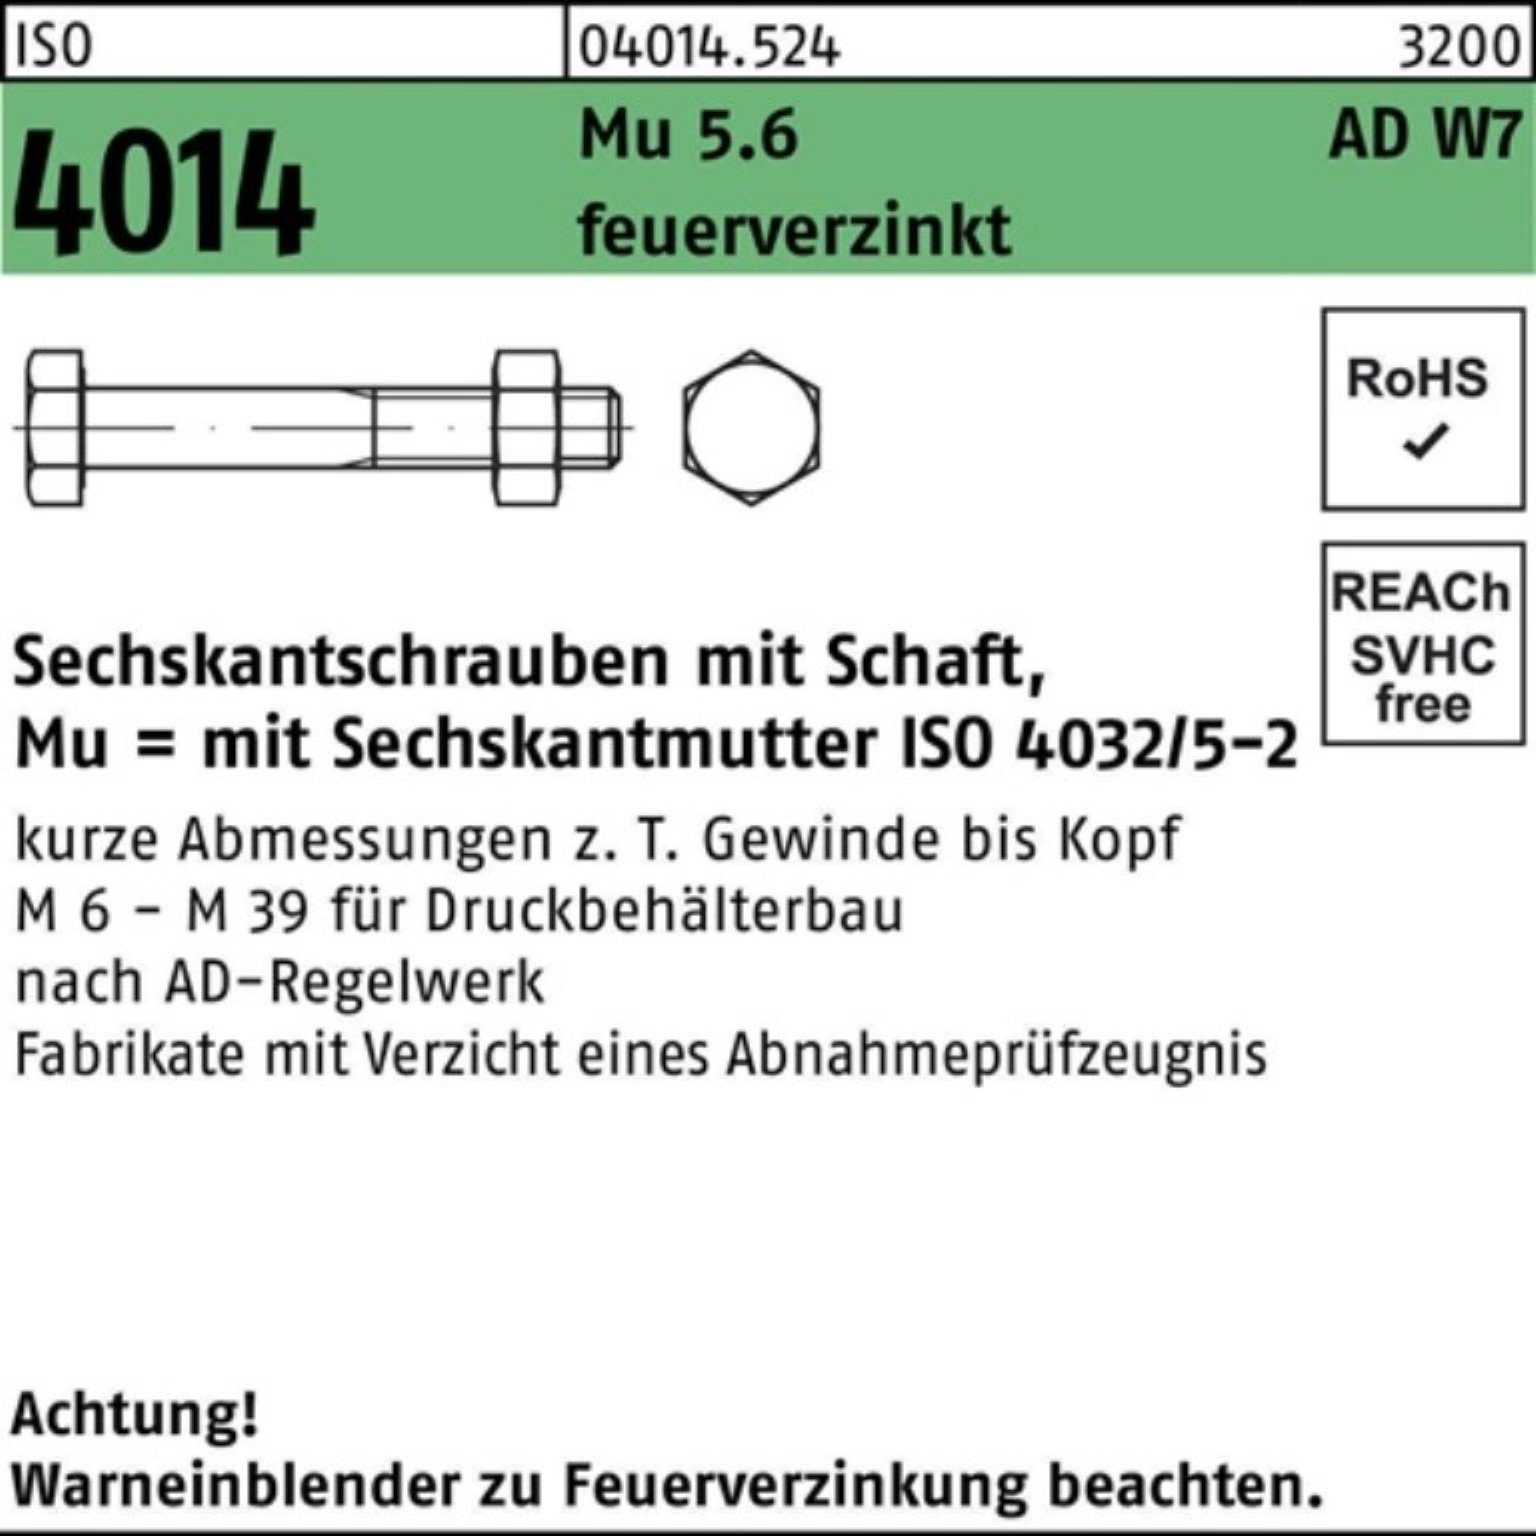 Bufab Sechskantschraube M24x W7 feuerv 4014 Sechskantschraube Schaft Pack 100er 5.6 ISO Mu 140